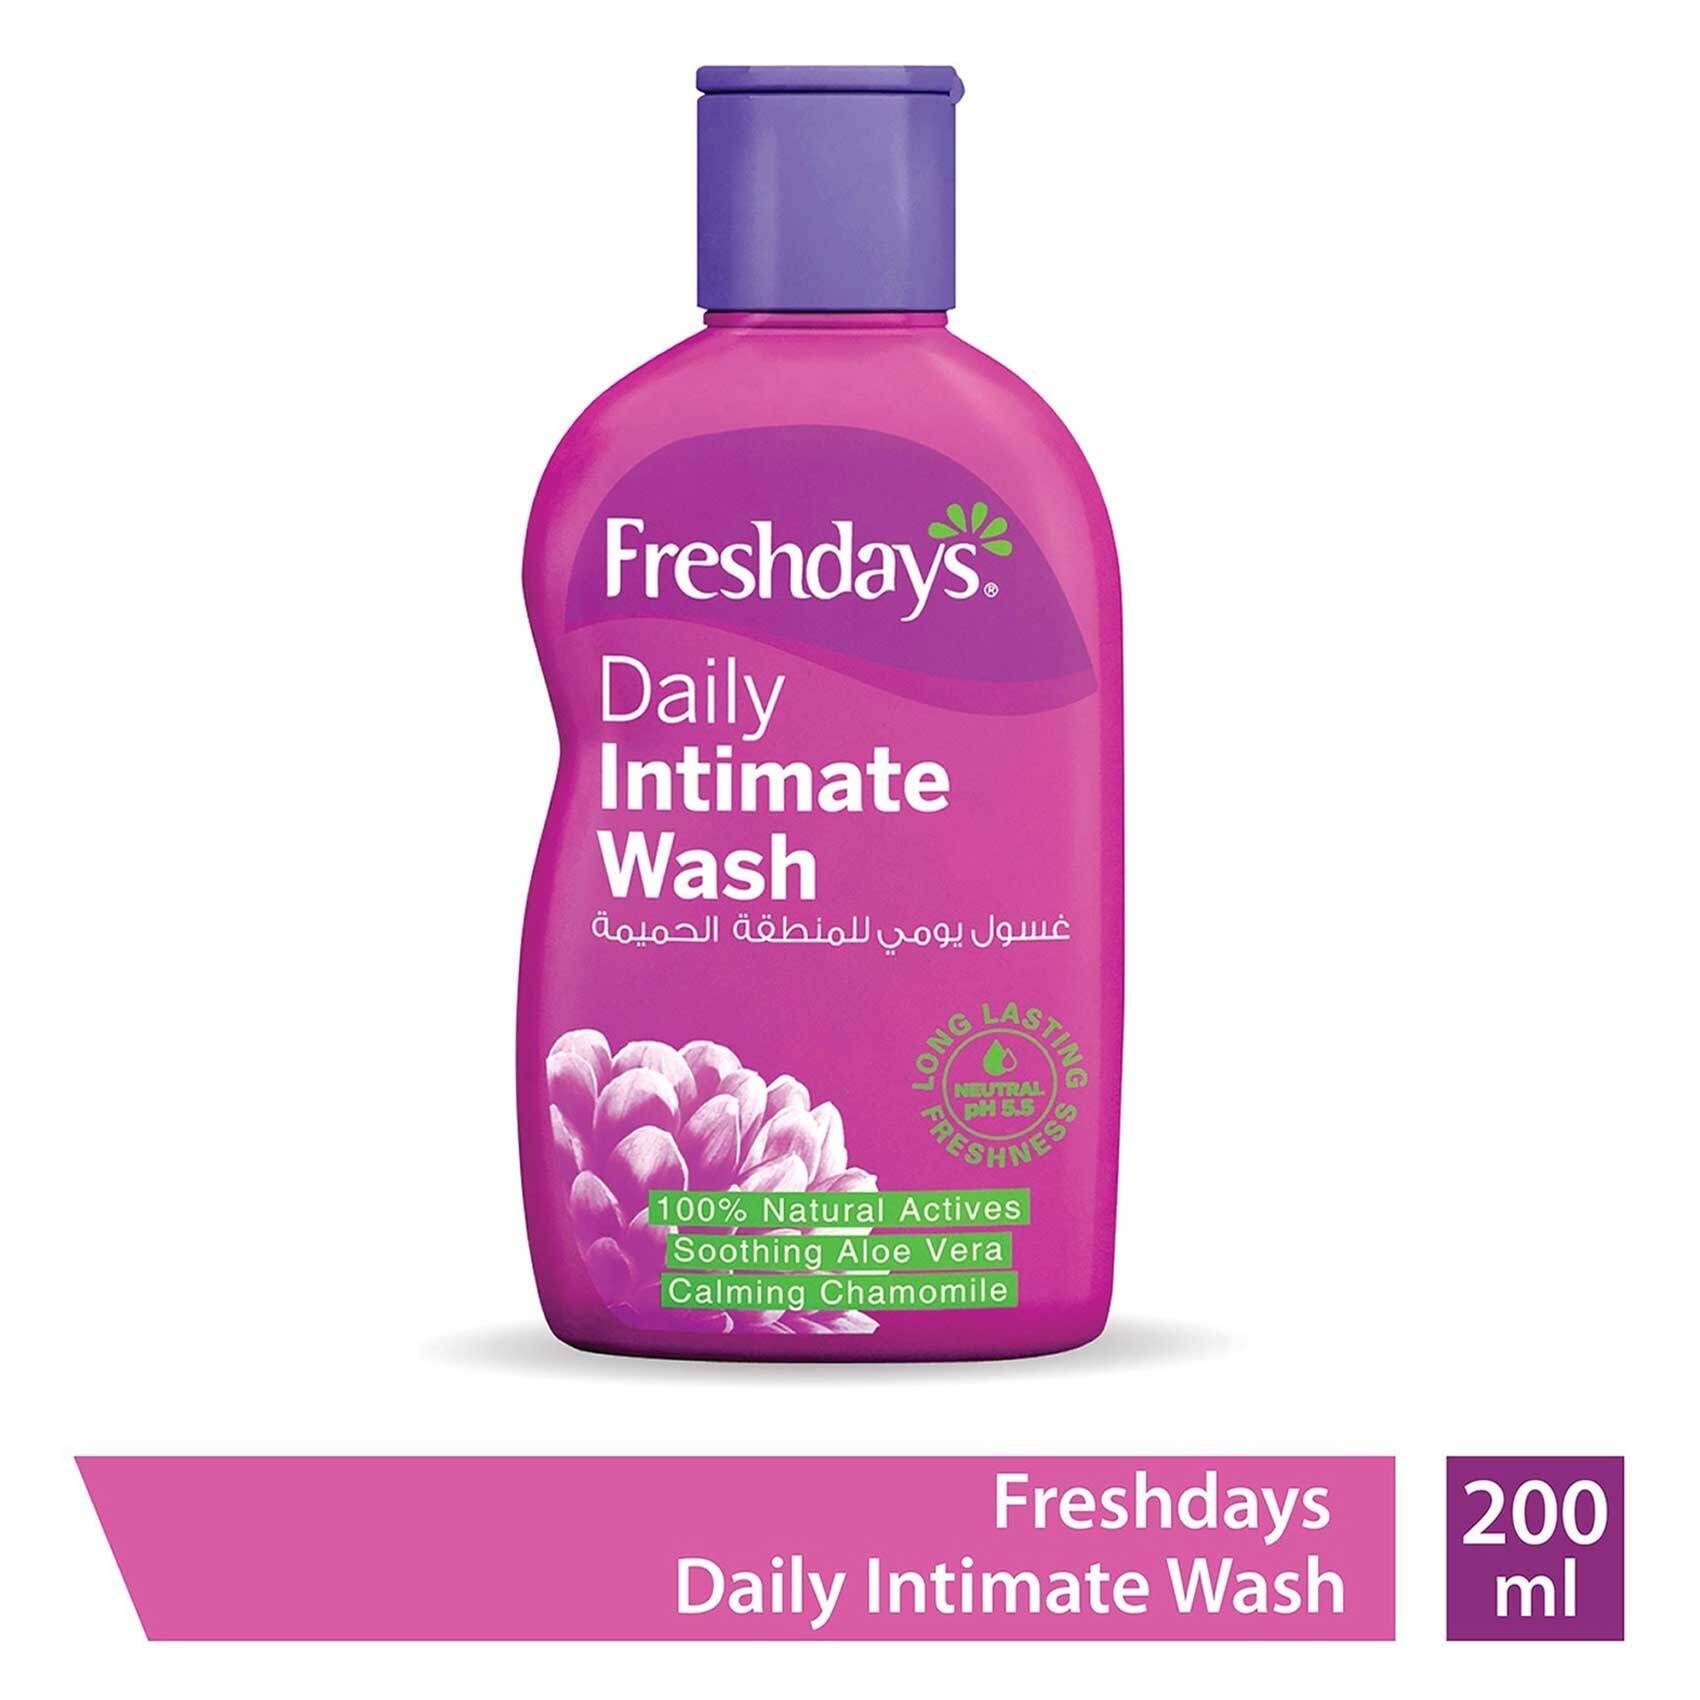 Femfresh - Daily Intimate Wash - with soothing aloe vera - 250ml x 2 Packs